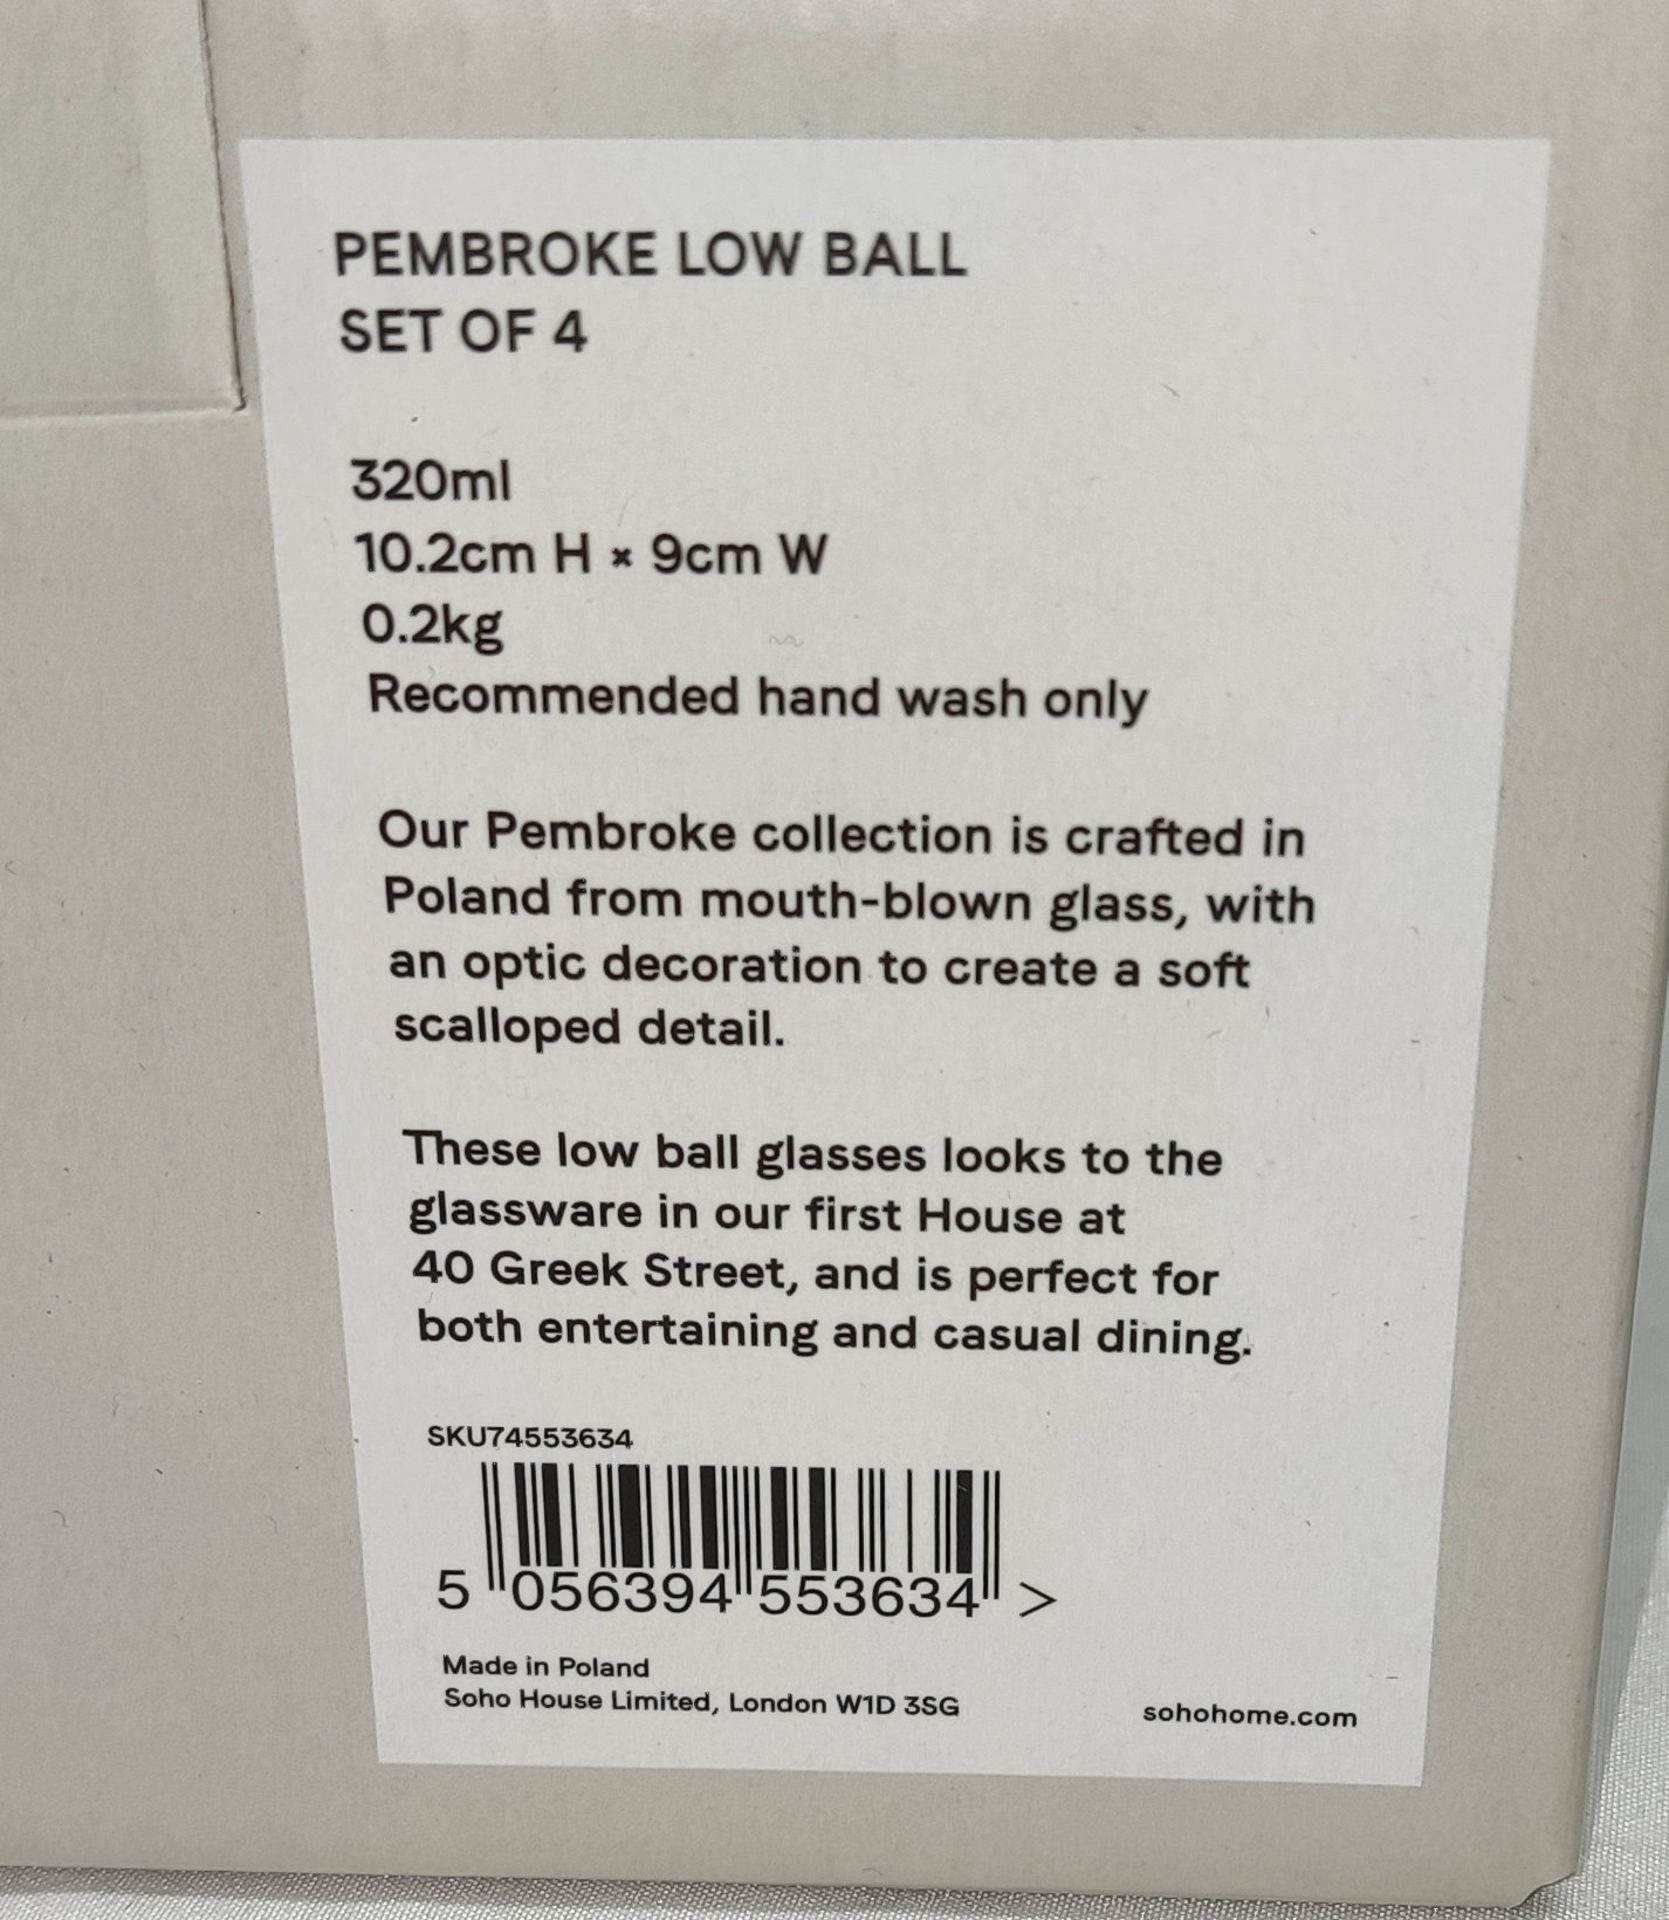 3 x SOHO HOME Pembroke Low Ball Glasses - New/Boxed - Original RRP £70 - Ref: 6909149/HJL368/C19/ - Image 8 of 11